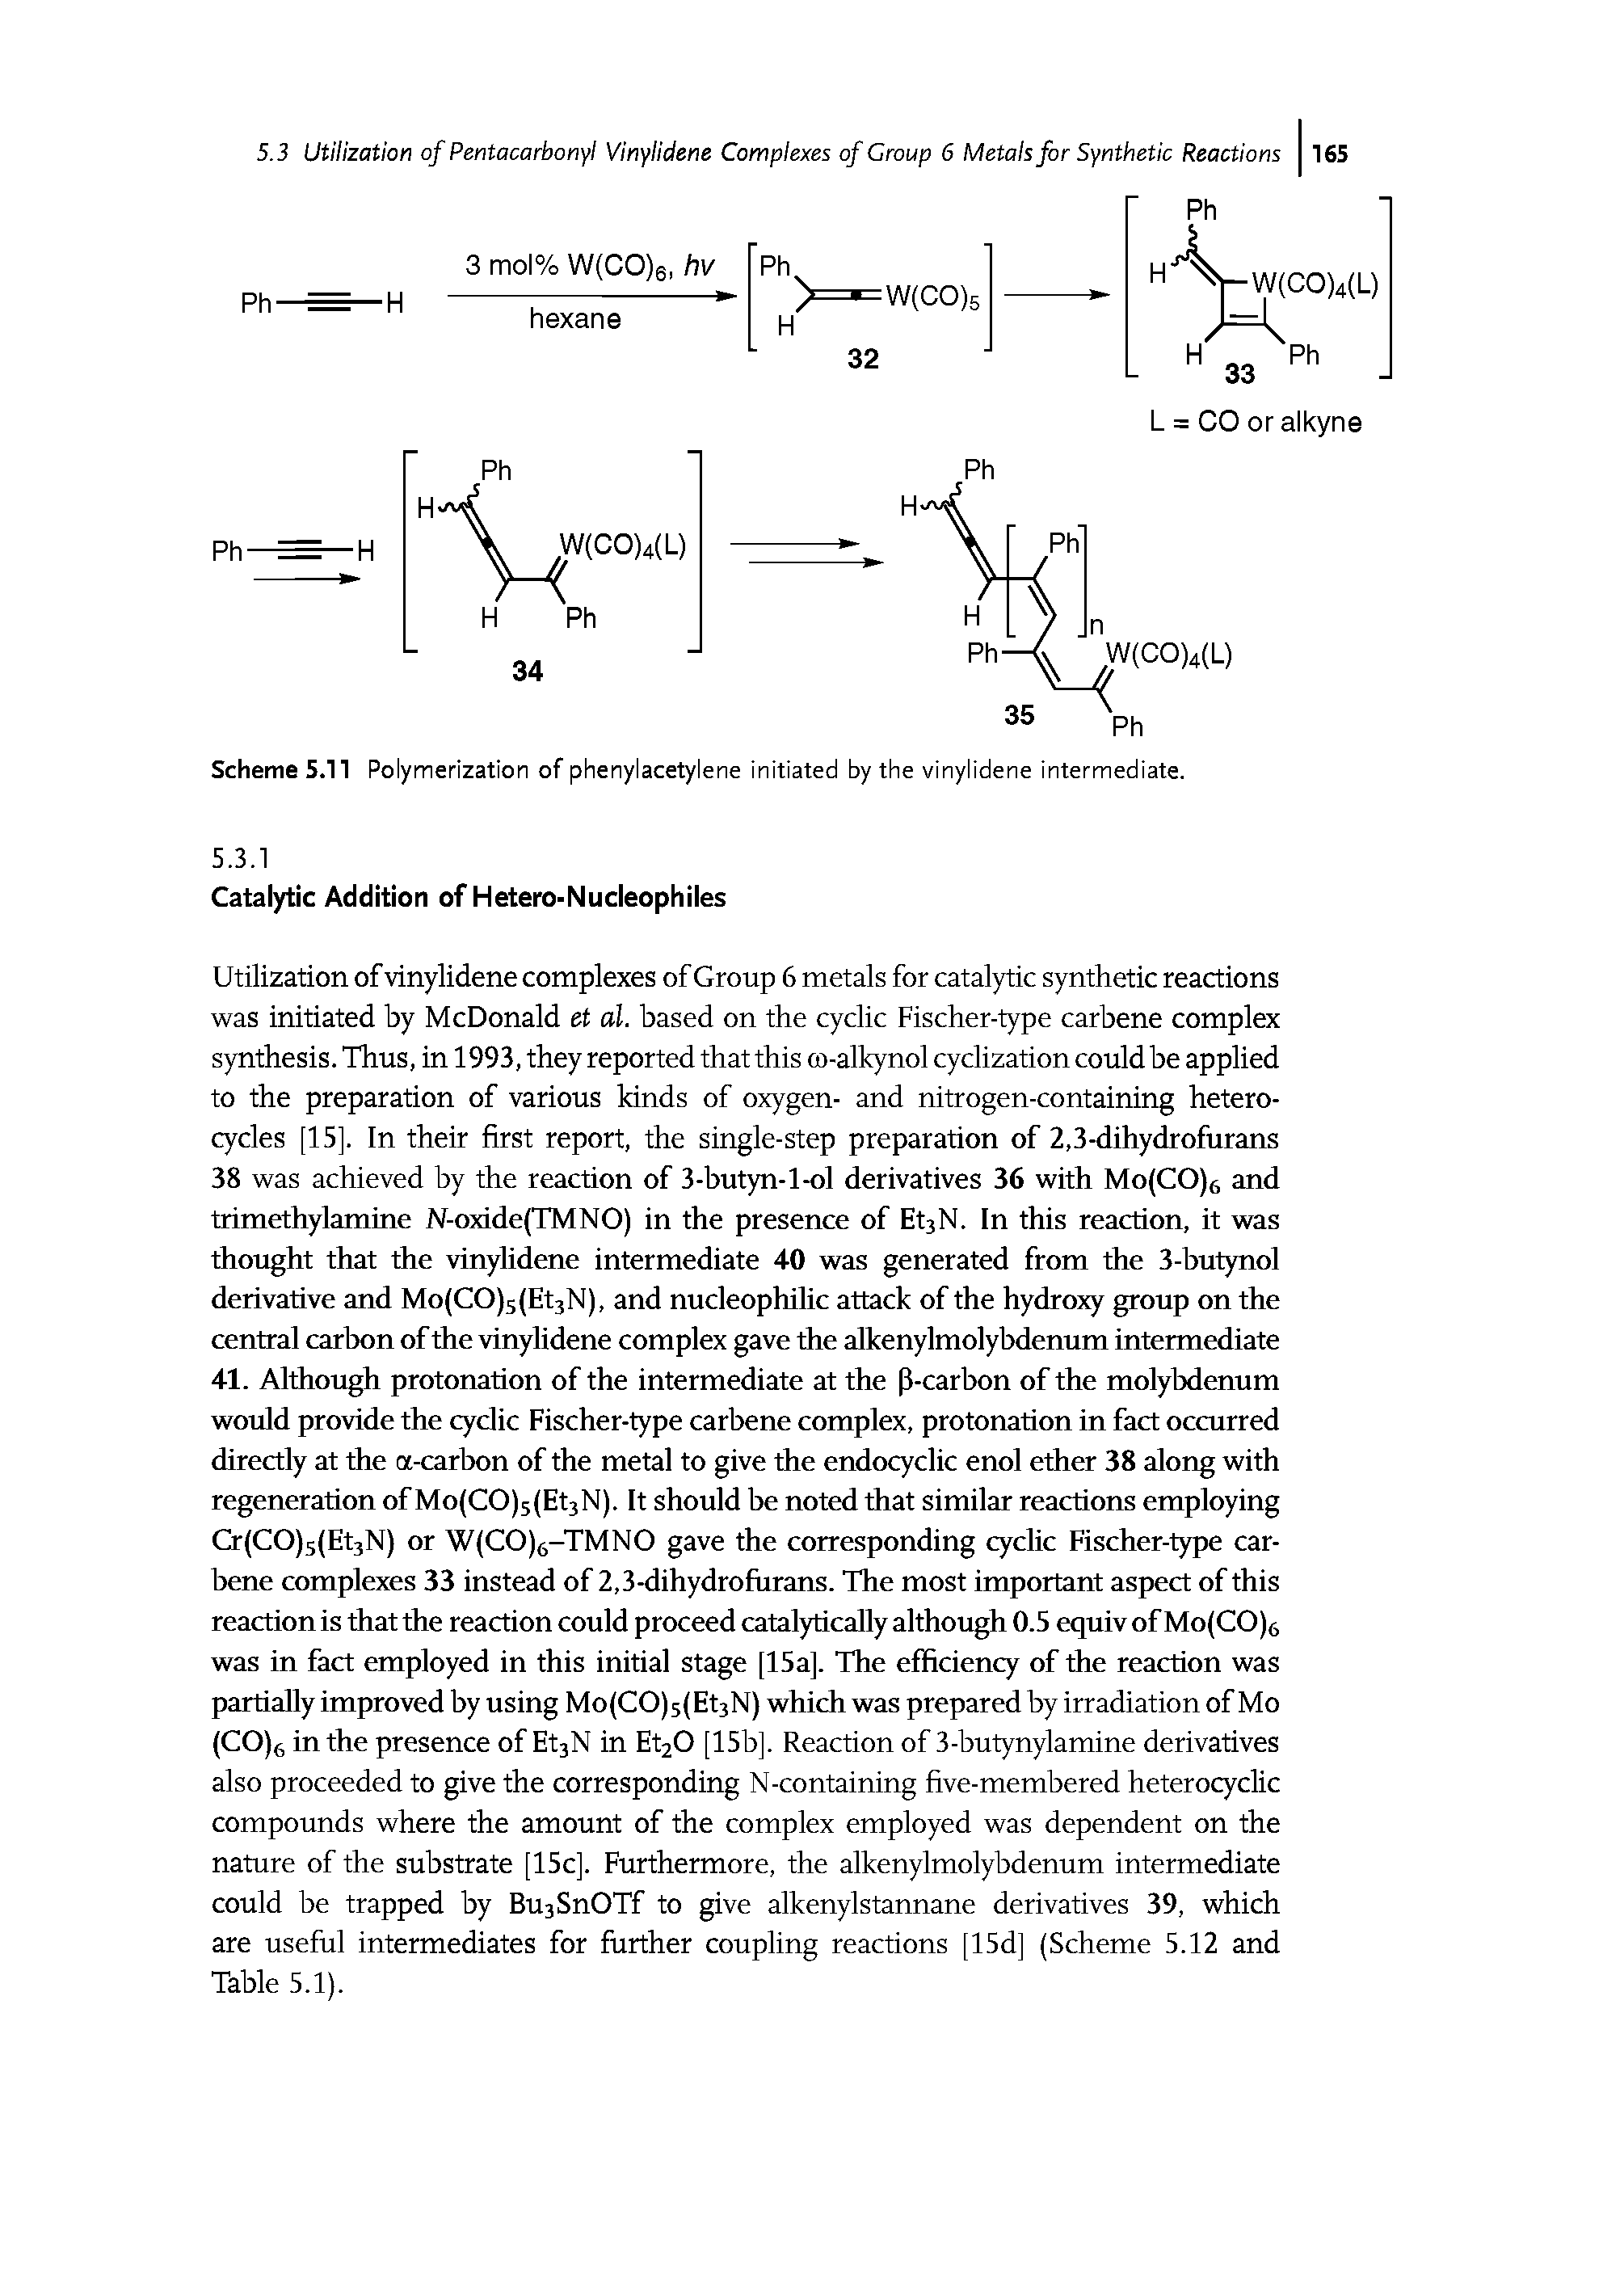 Scheme 5.11 Polymerization of phenylacetylene initiated by the vinyiidene intermediate.